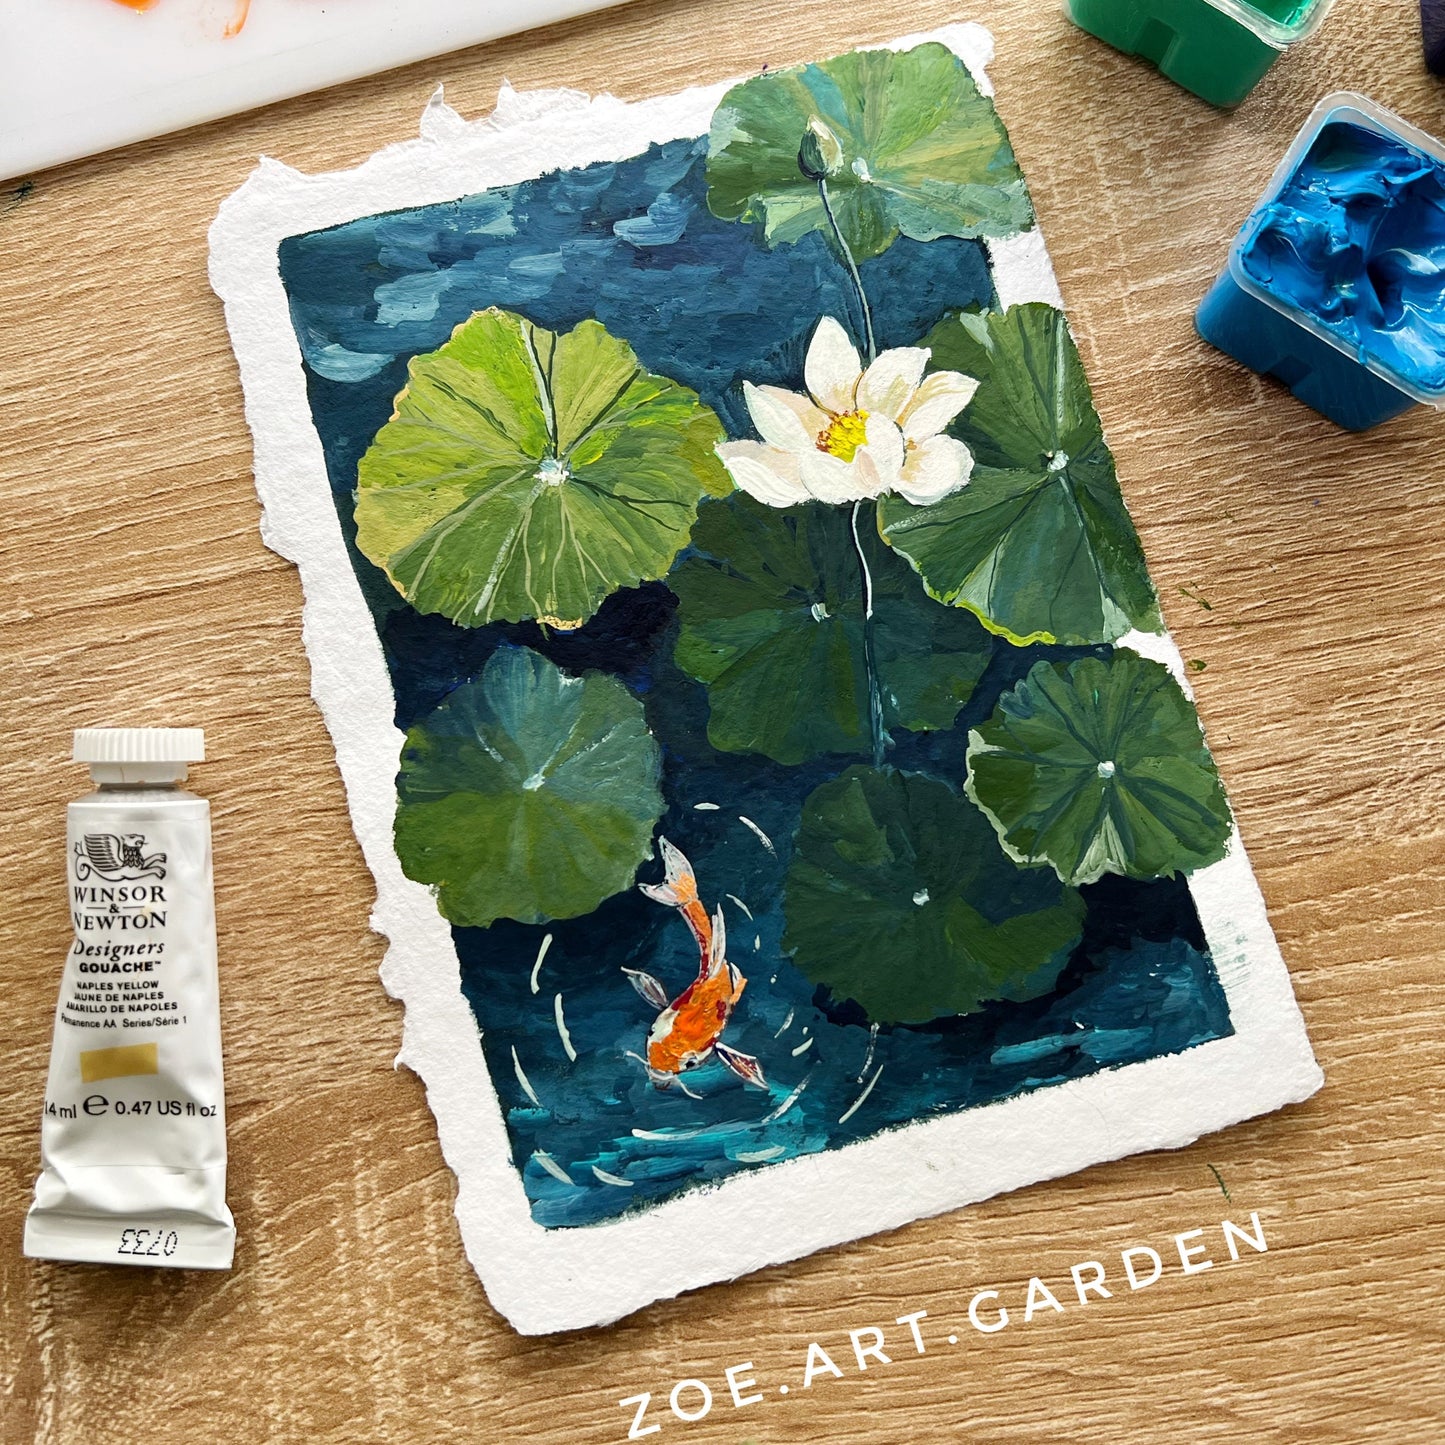 Zen No.1- Lotus pond and koi fish- Original Gouache painting